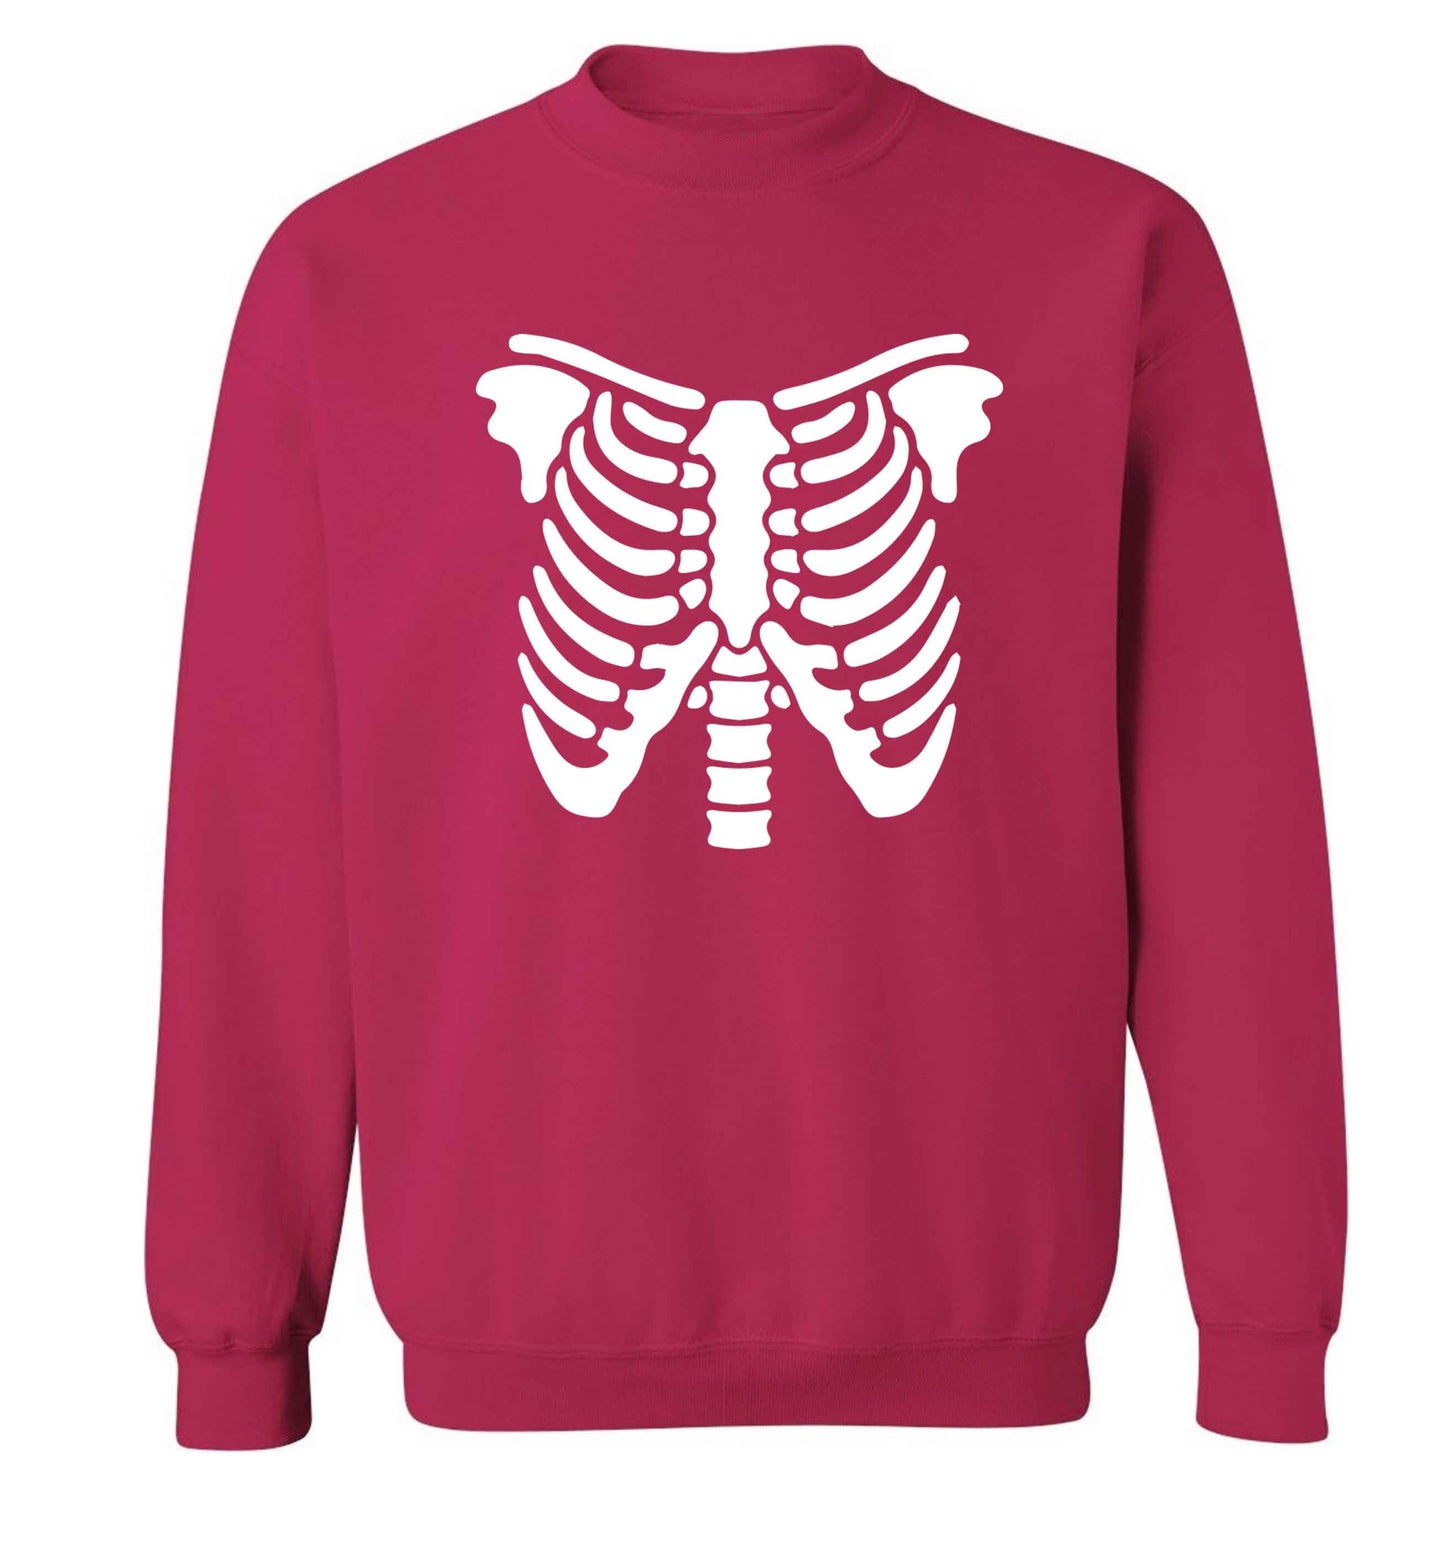 Skeleton ribcage adult's unisex pink sweater 2XL